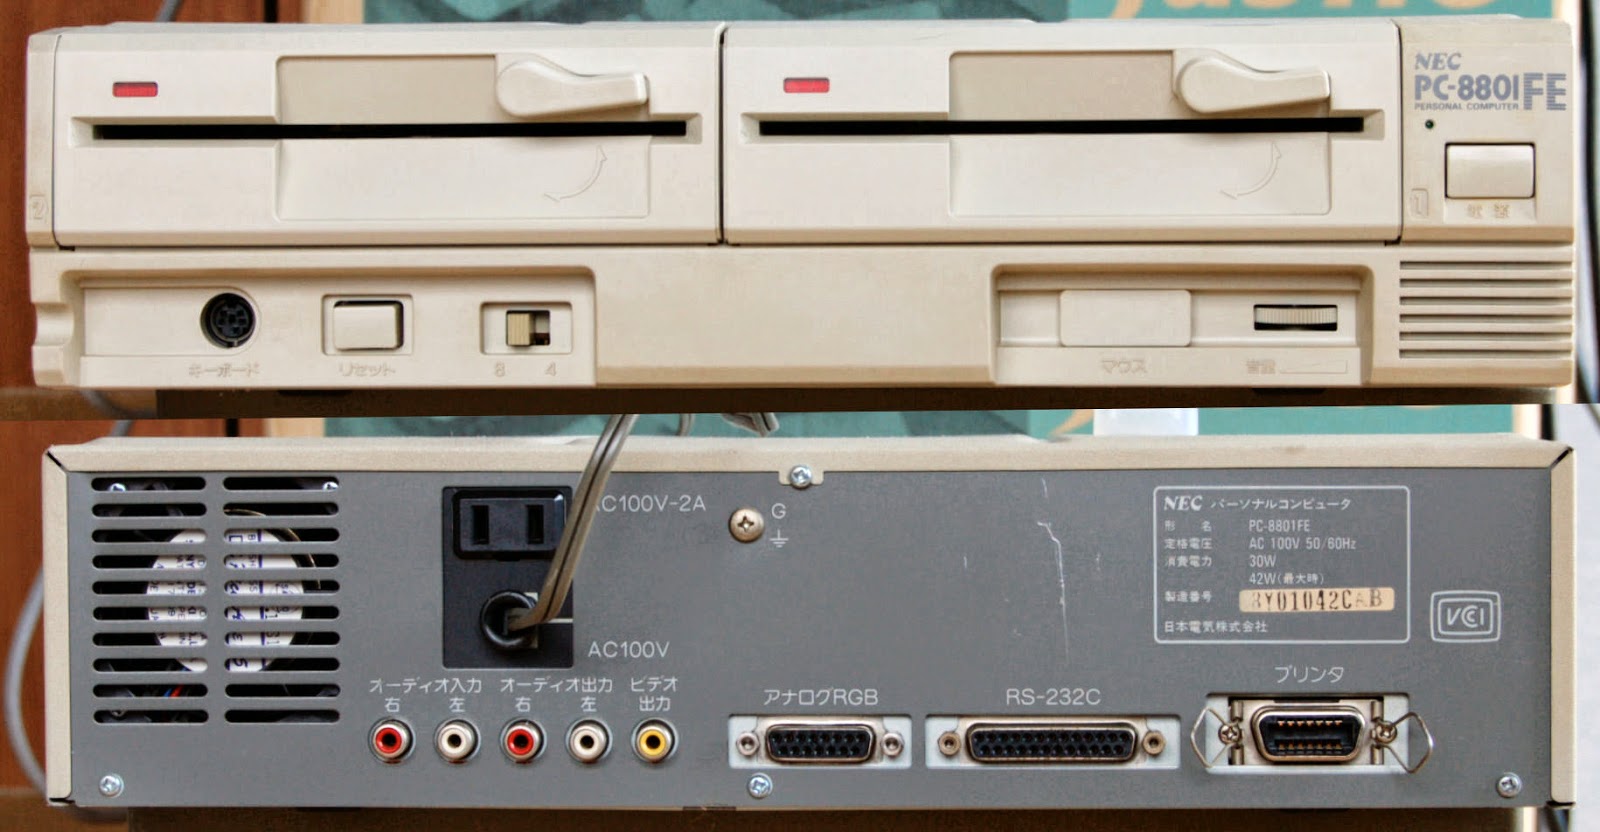 PC-8801FE 分解清掃